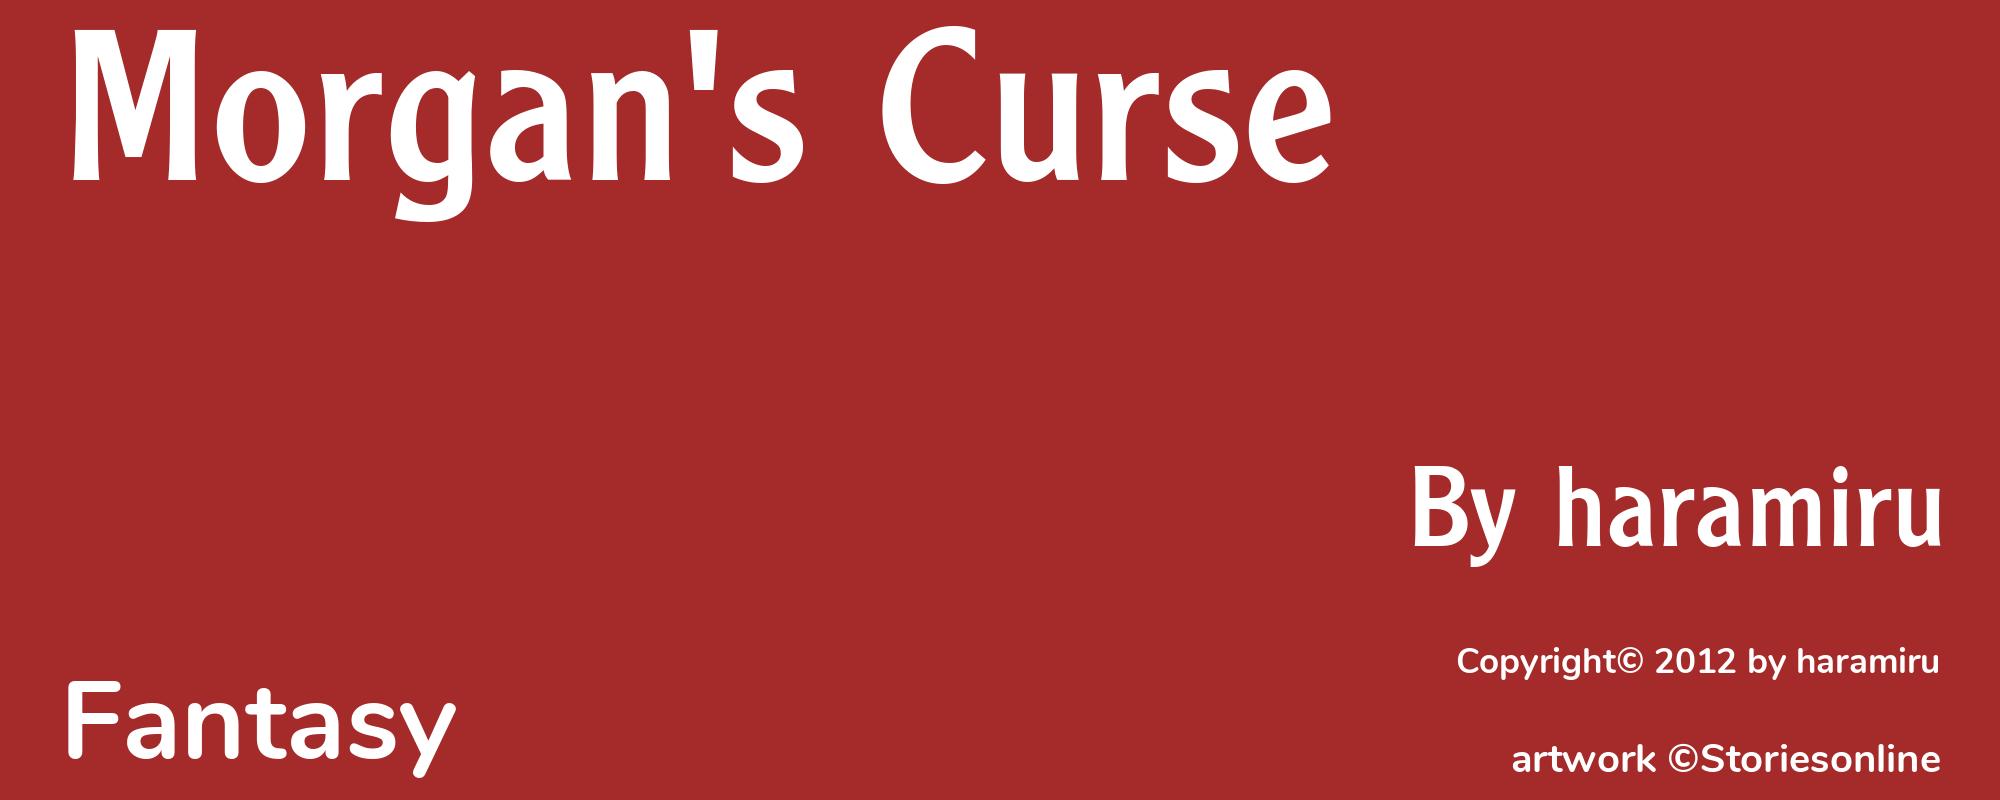 Morgan's Curse - Cover